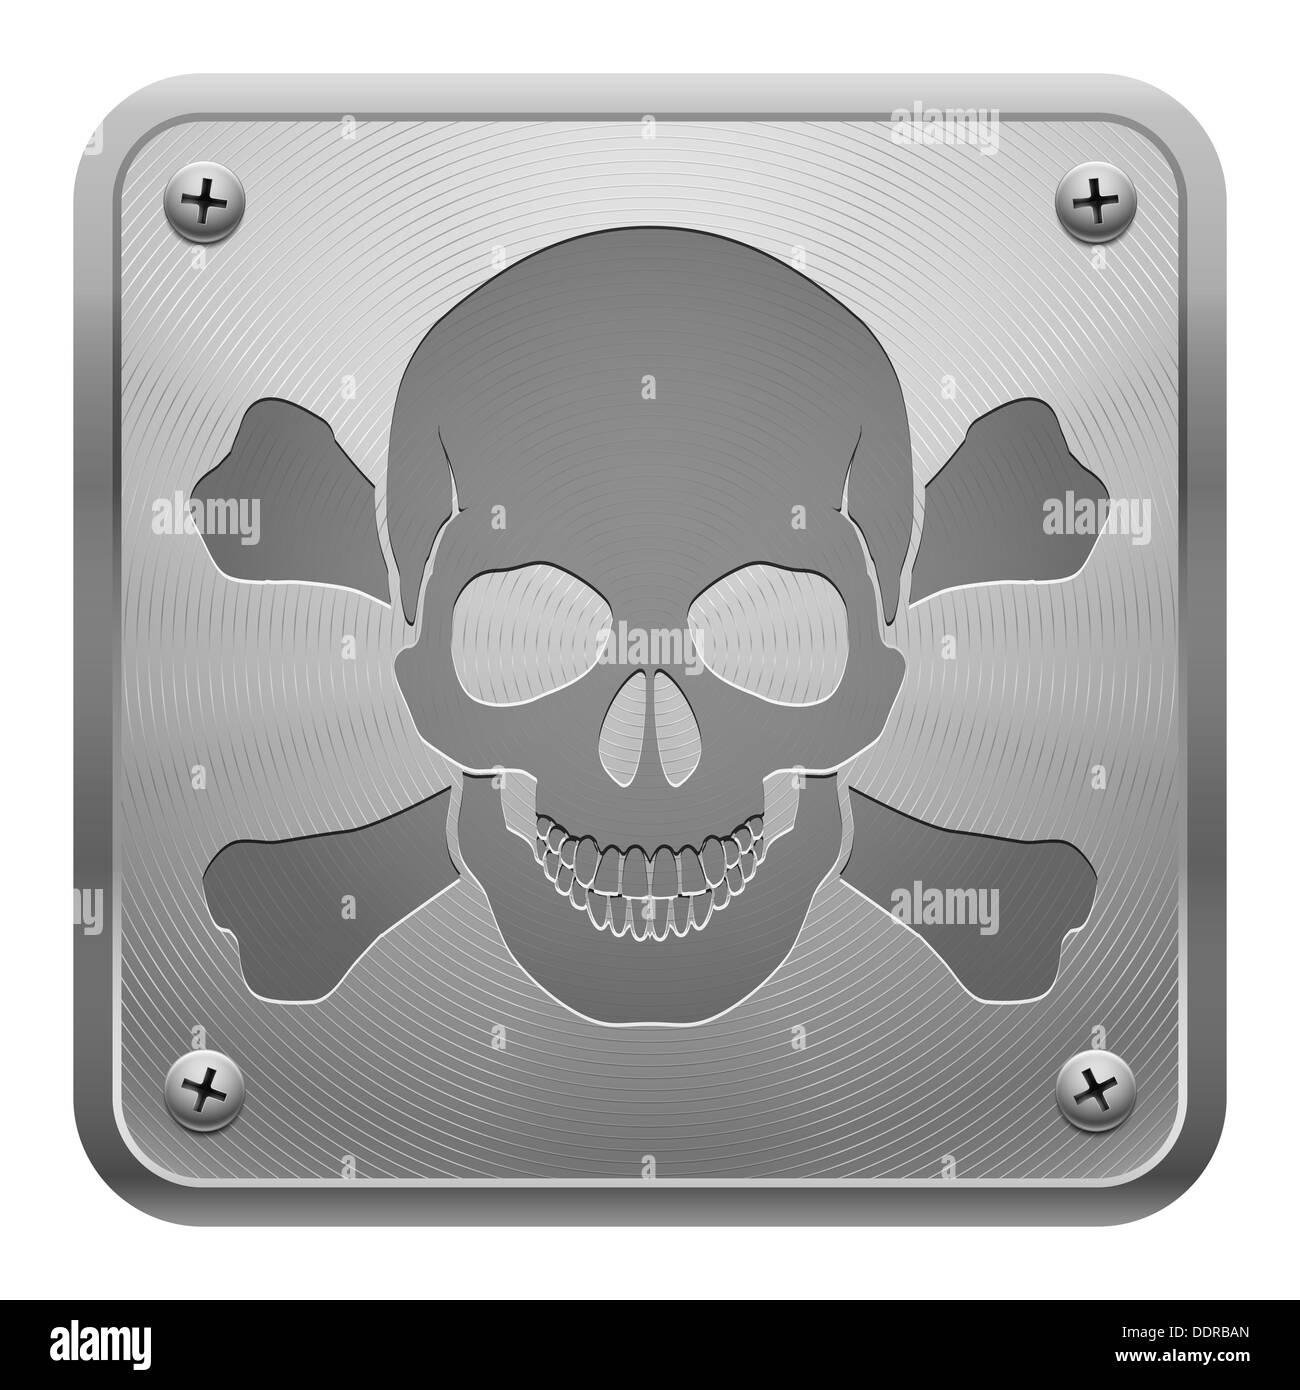 Metal tablet fixed with screws representing relief image of skull and cross-bones. Symbol of danger. Stock Photo